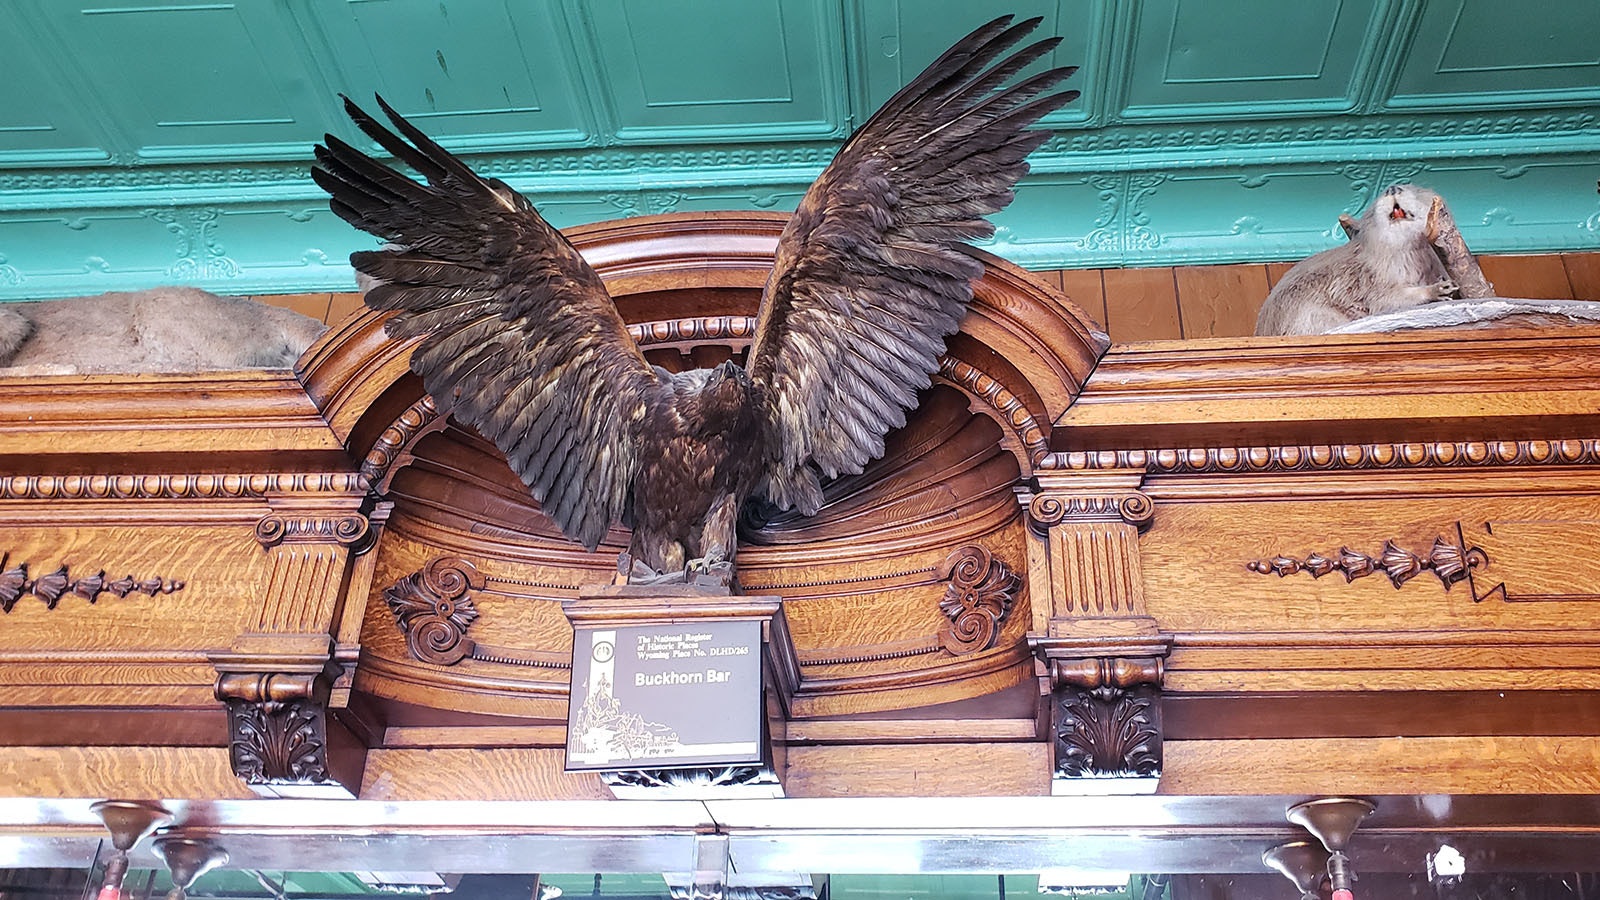 An eagle in midflight has soared over the buckhorn bar for decades.